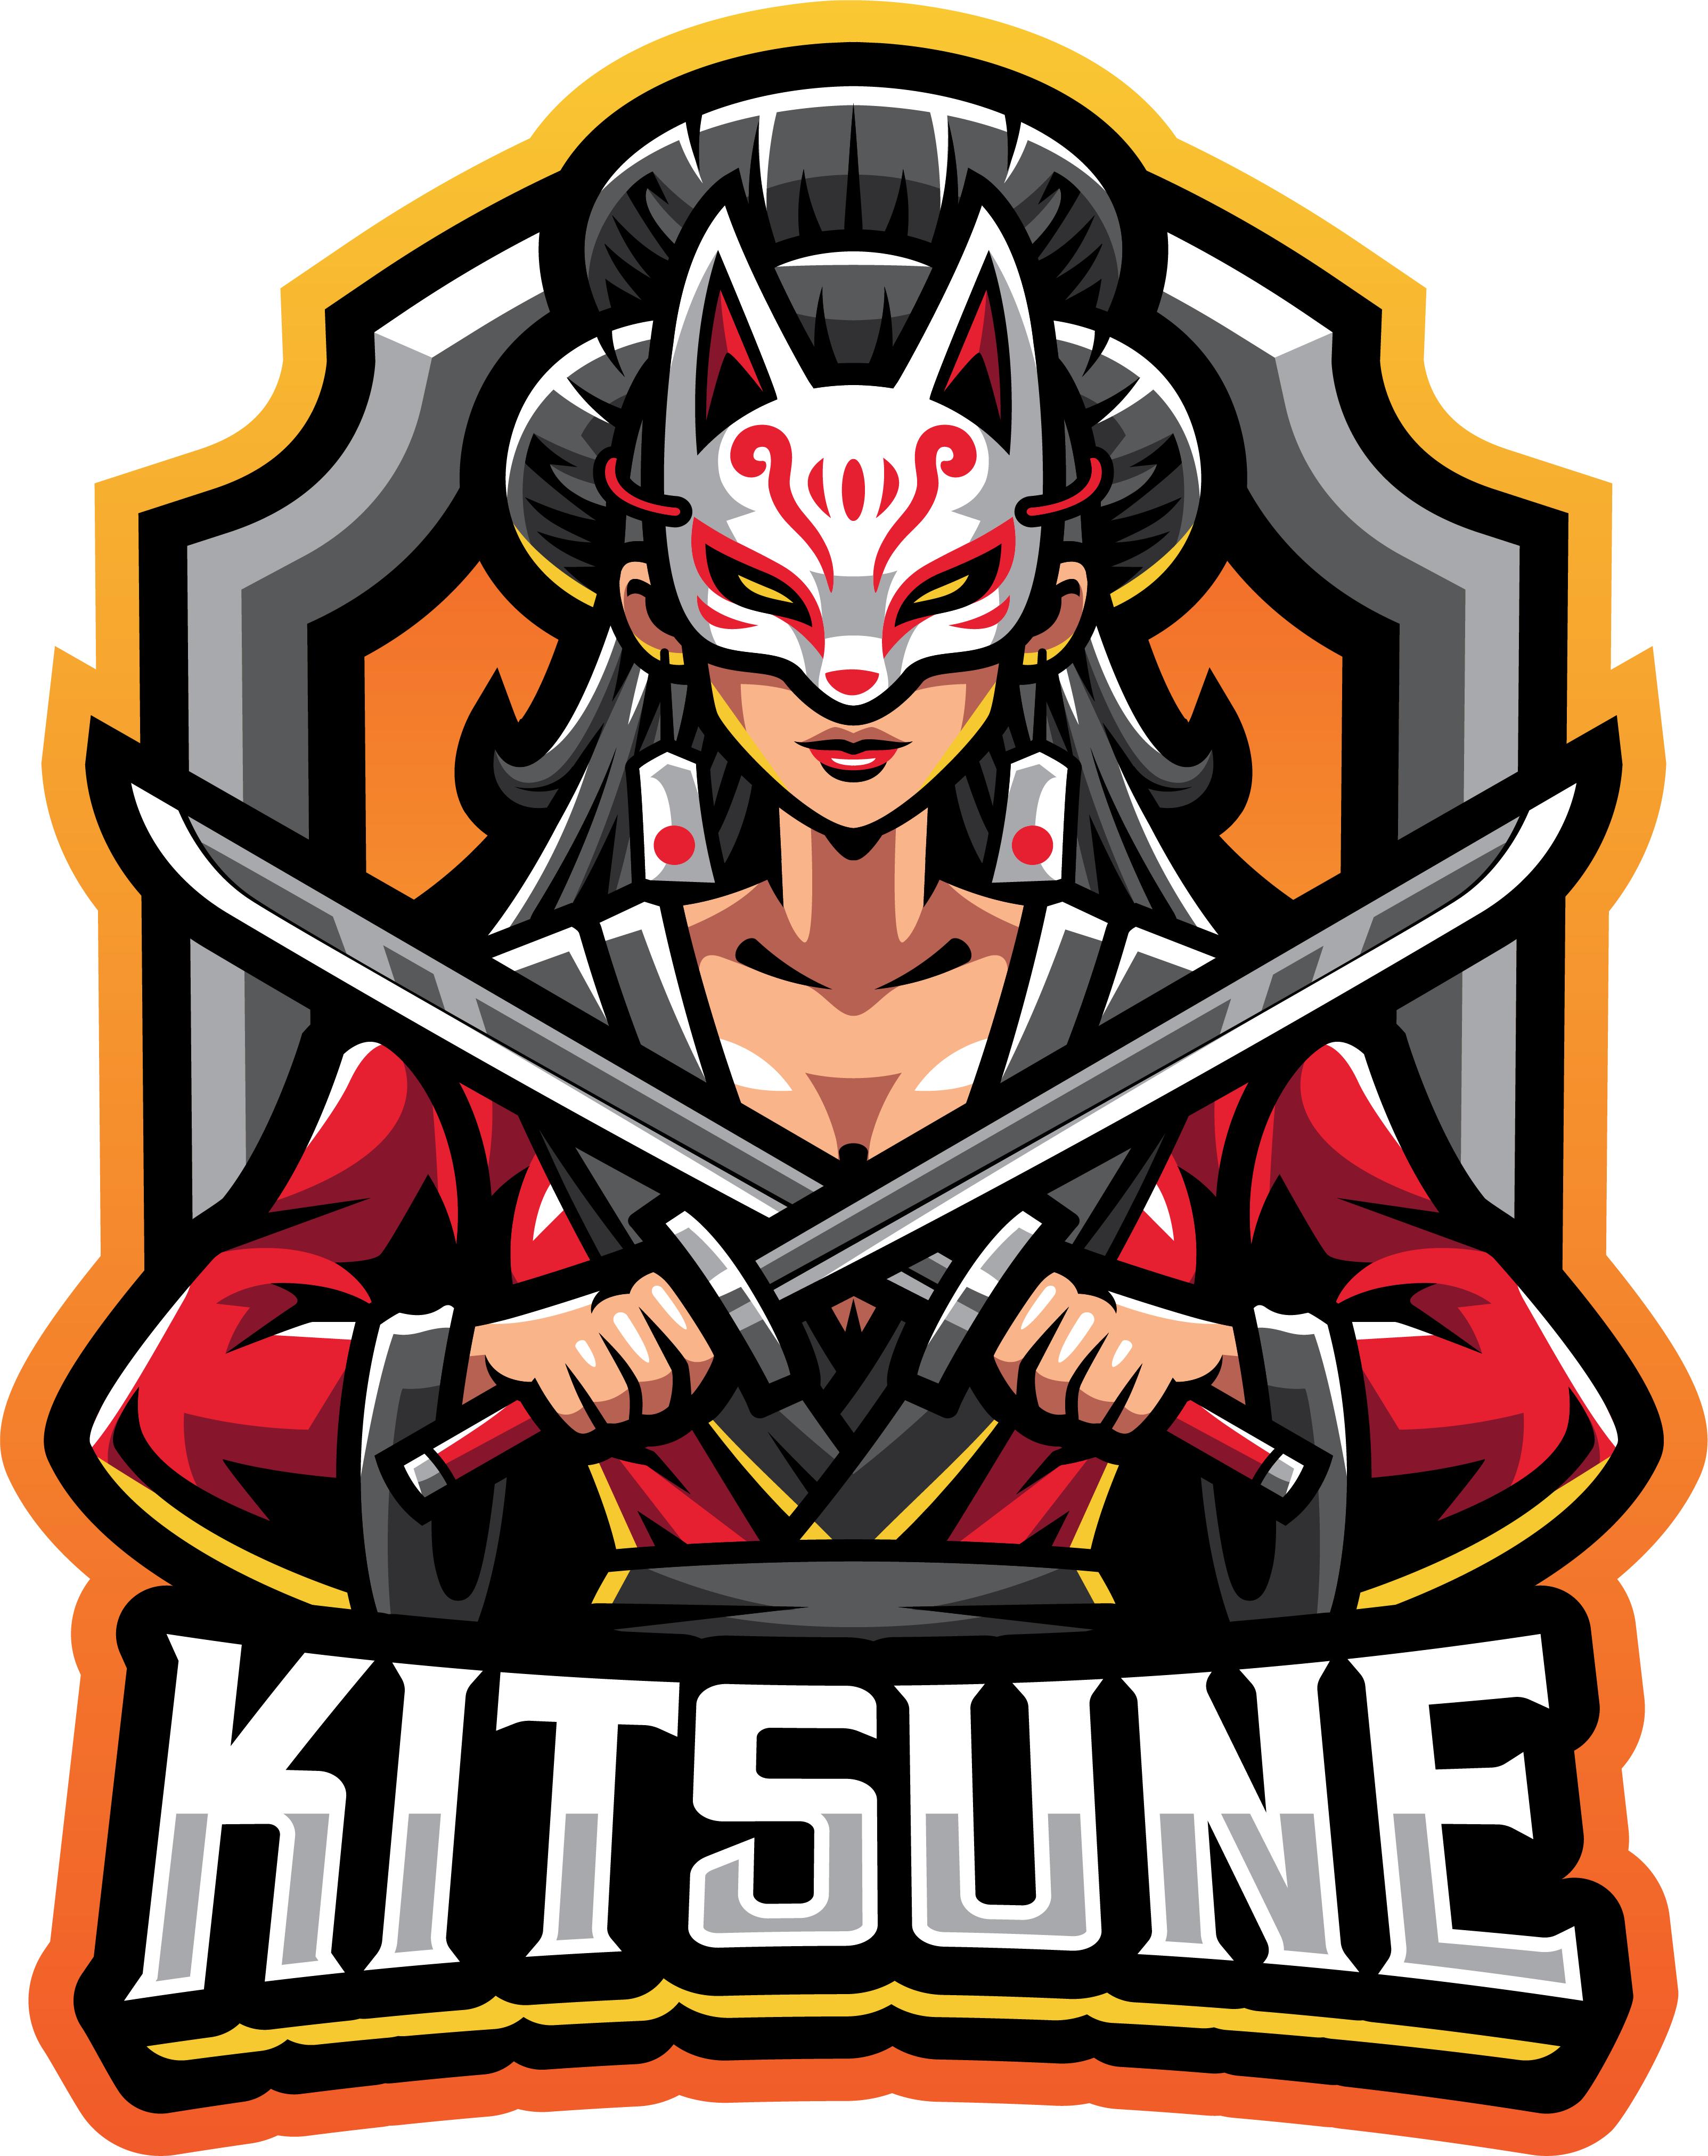 Kitsune girl esport mascot logo design By Visink | TheHungryJPEG.com